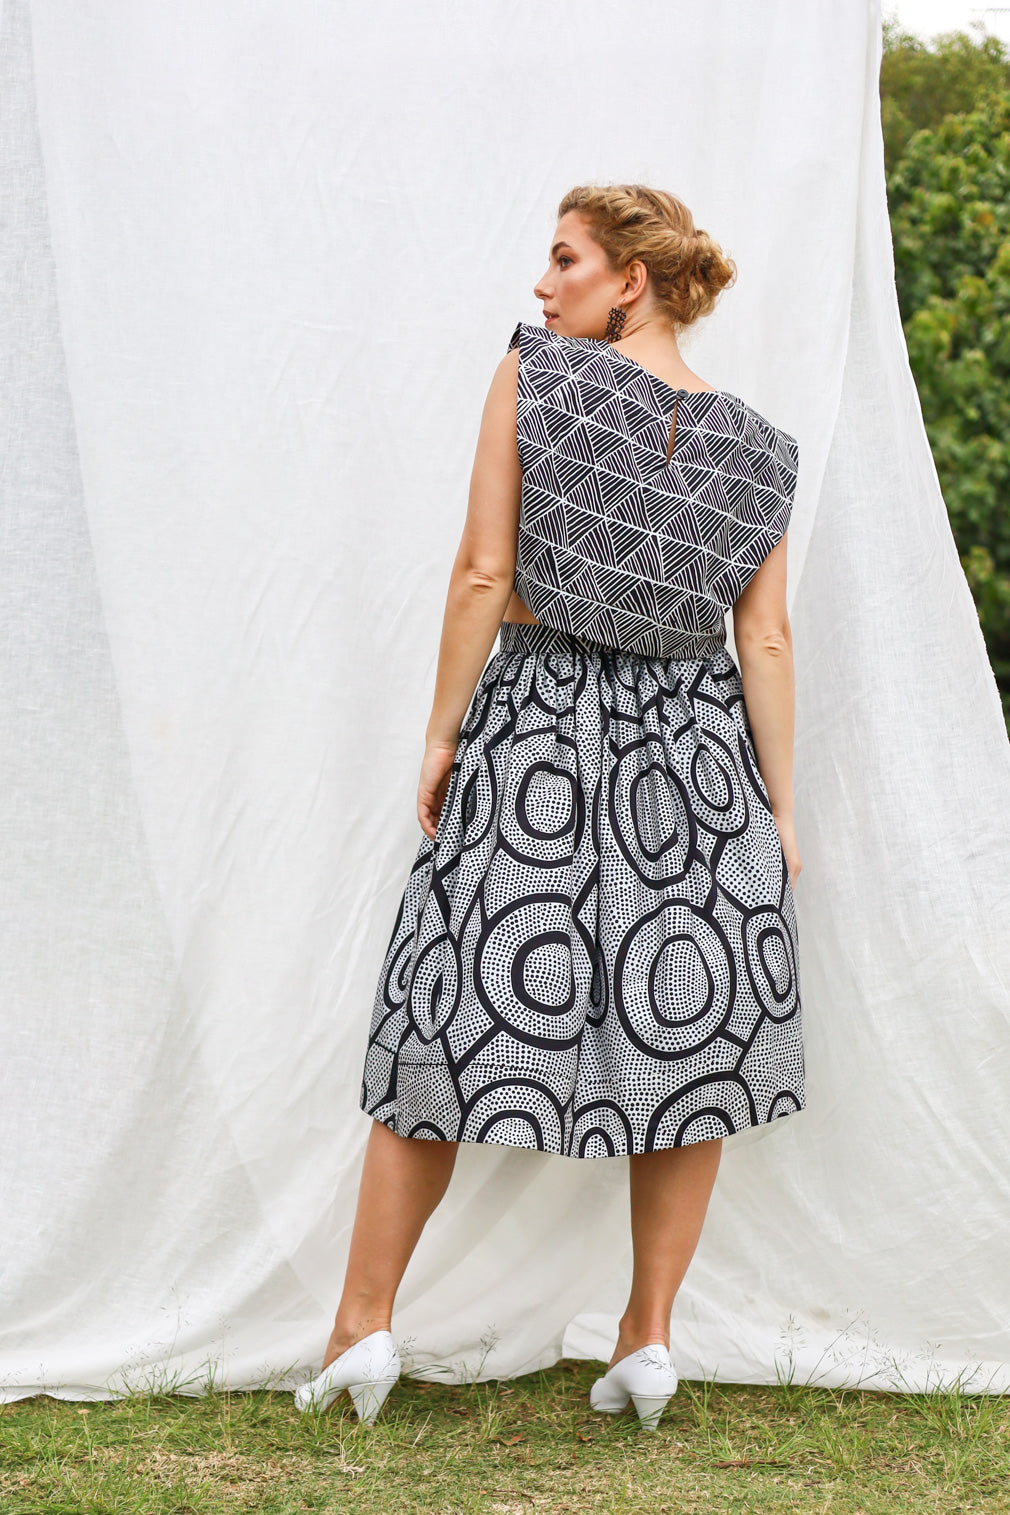 GLORY by Tiwi Design x Ossom Kulama Pleated Skirt in Lightweight Cotton